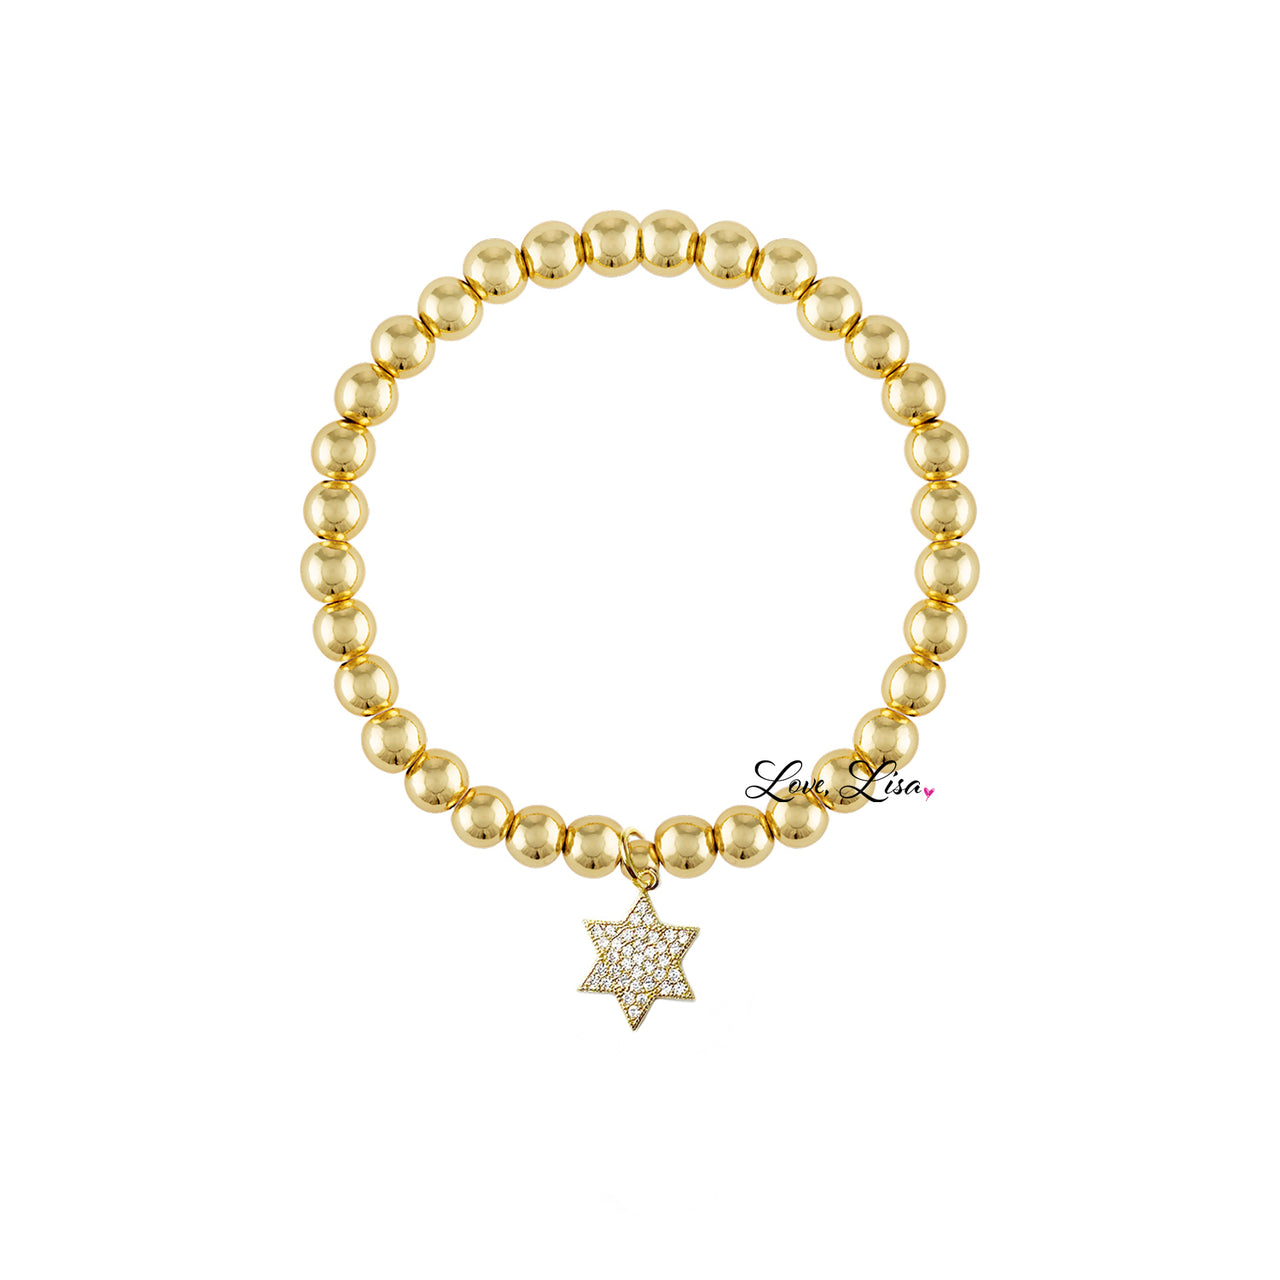 Hannah's Beautiful Jewish Star Bracelet